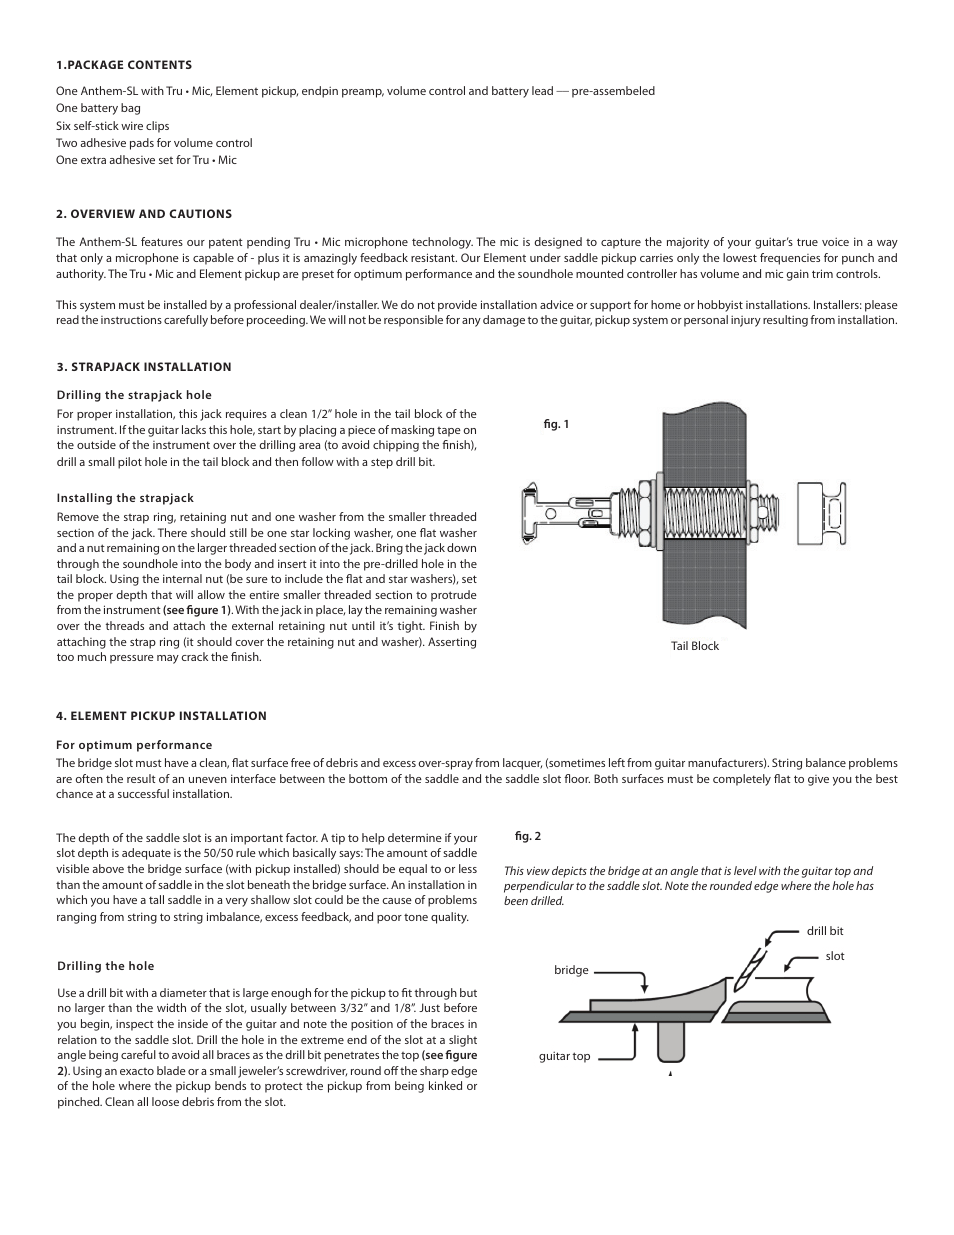 LR Baggs Anthem SL: Installation Manual User Manual | Page 2 / 4